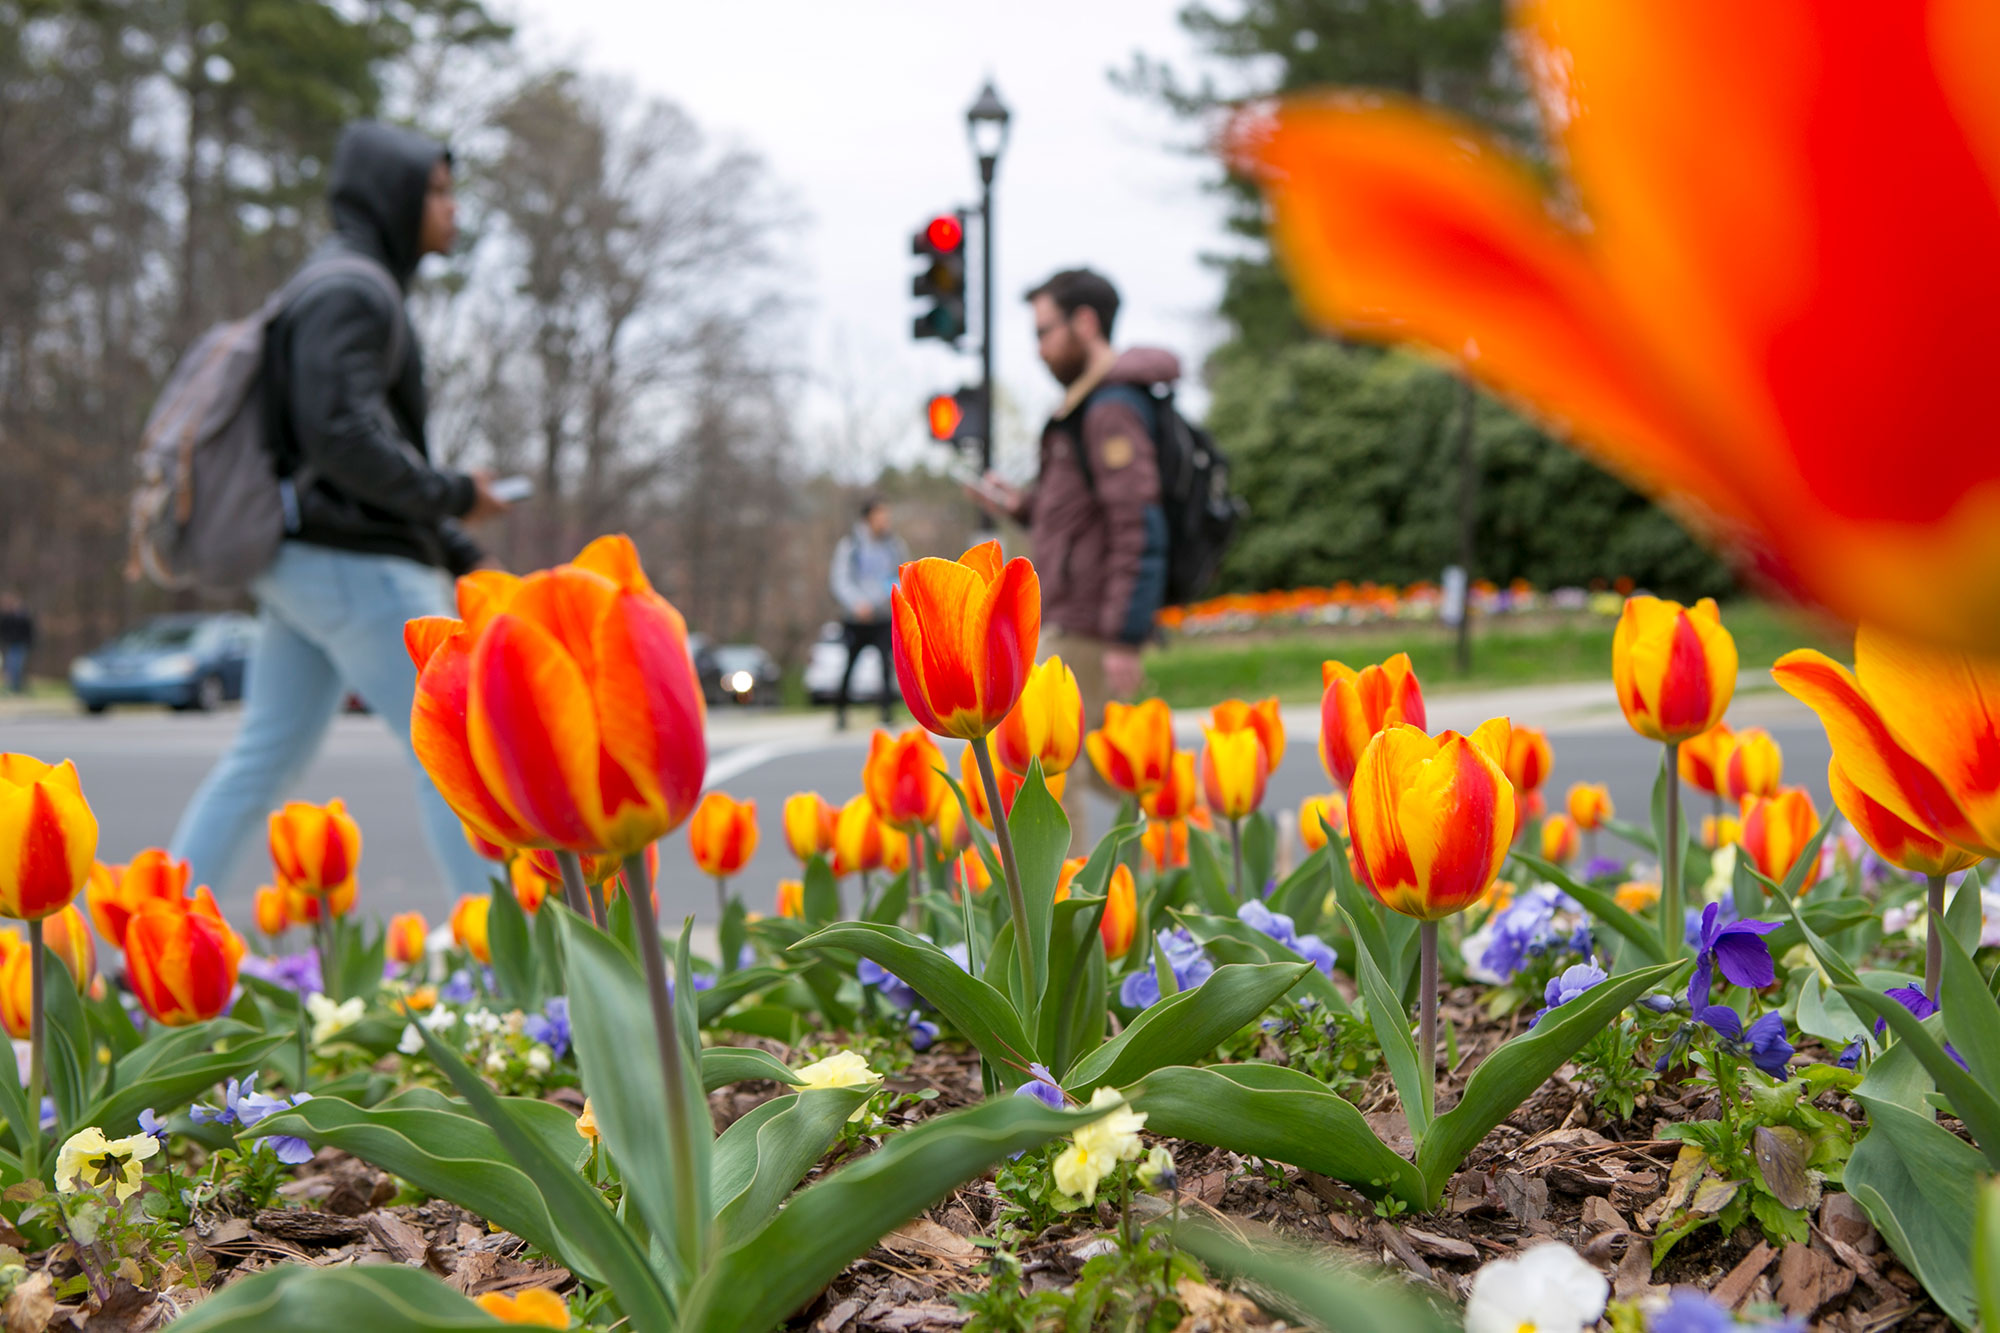 tulips on campus